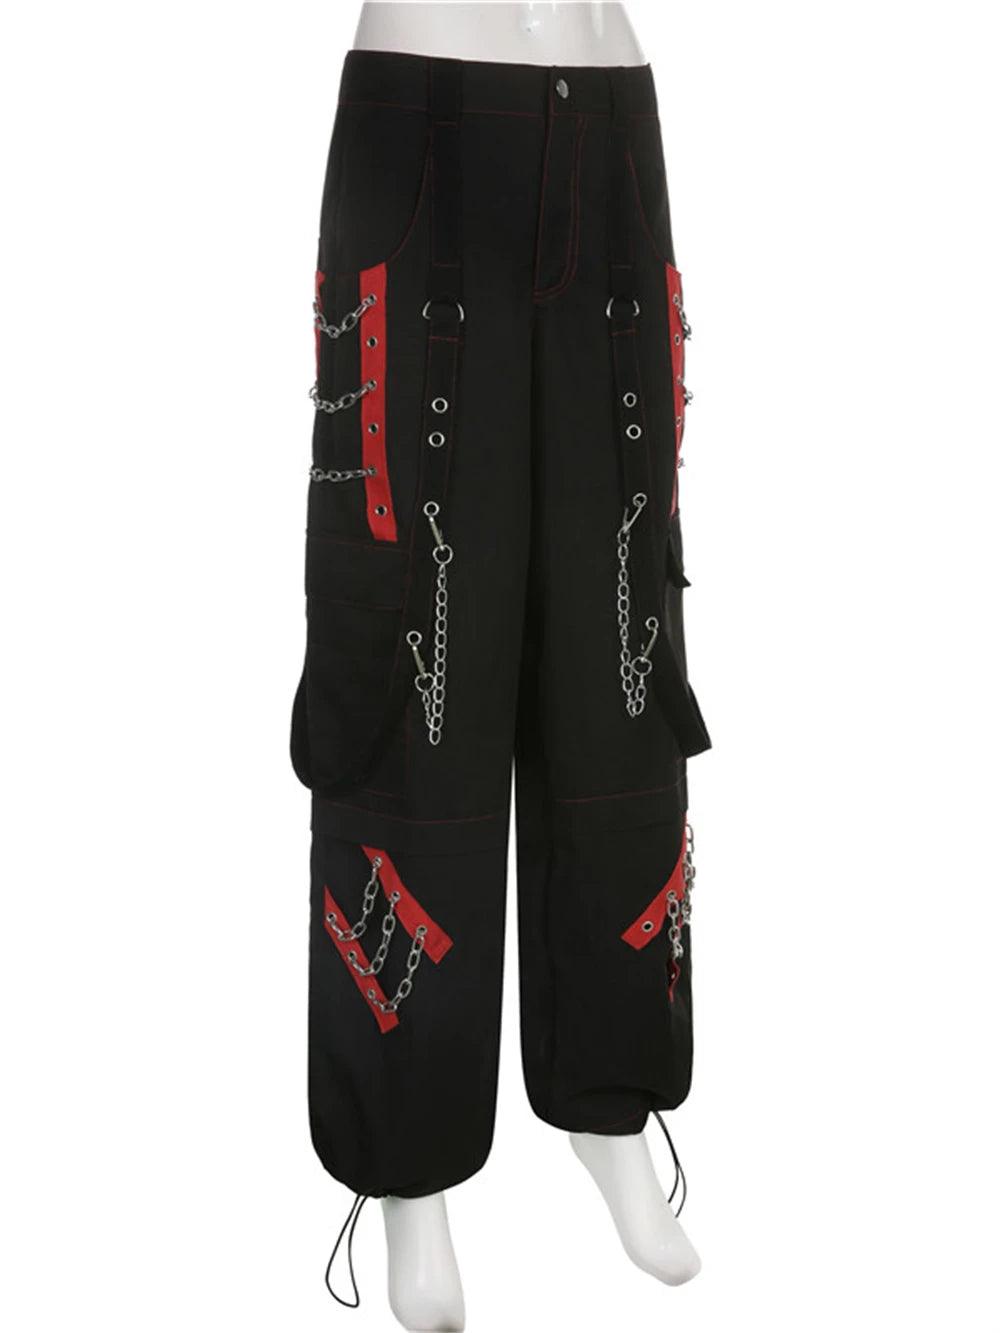 Pantalón gótico de pierna ancha para mujer - Urban Tribes Store